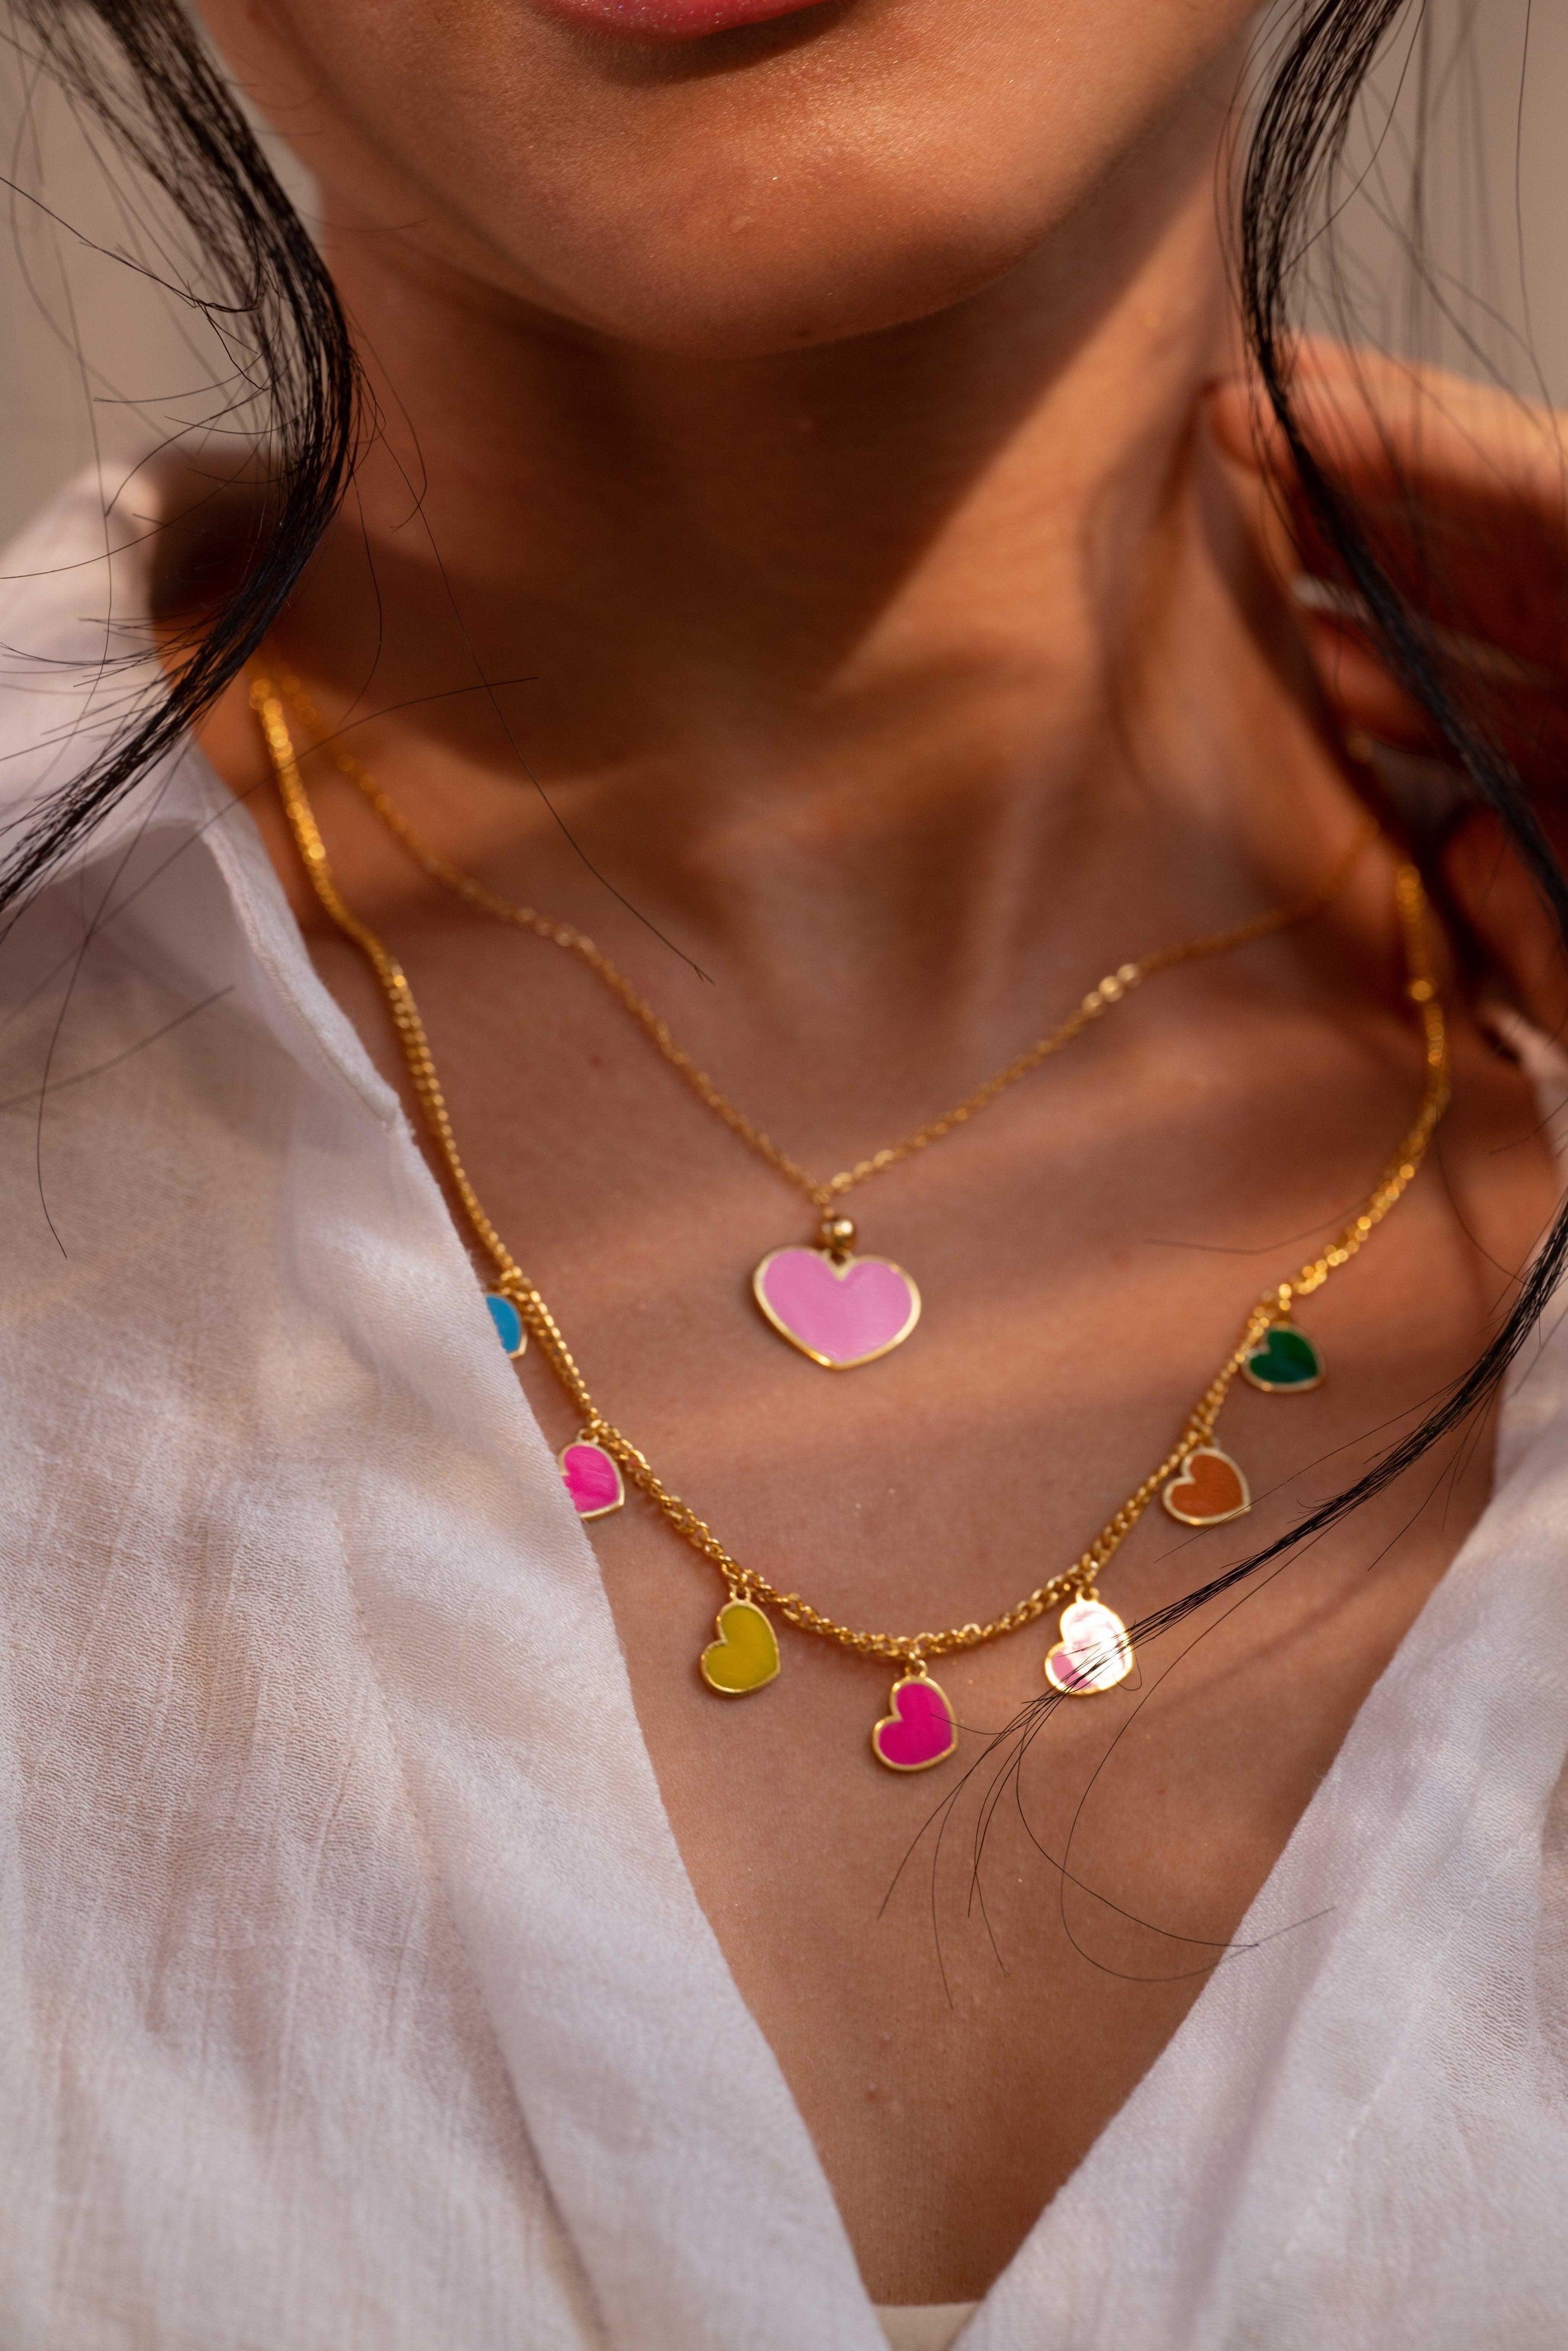 Color Heart Necklace - Yshmk